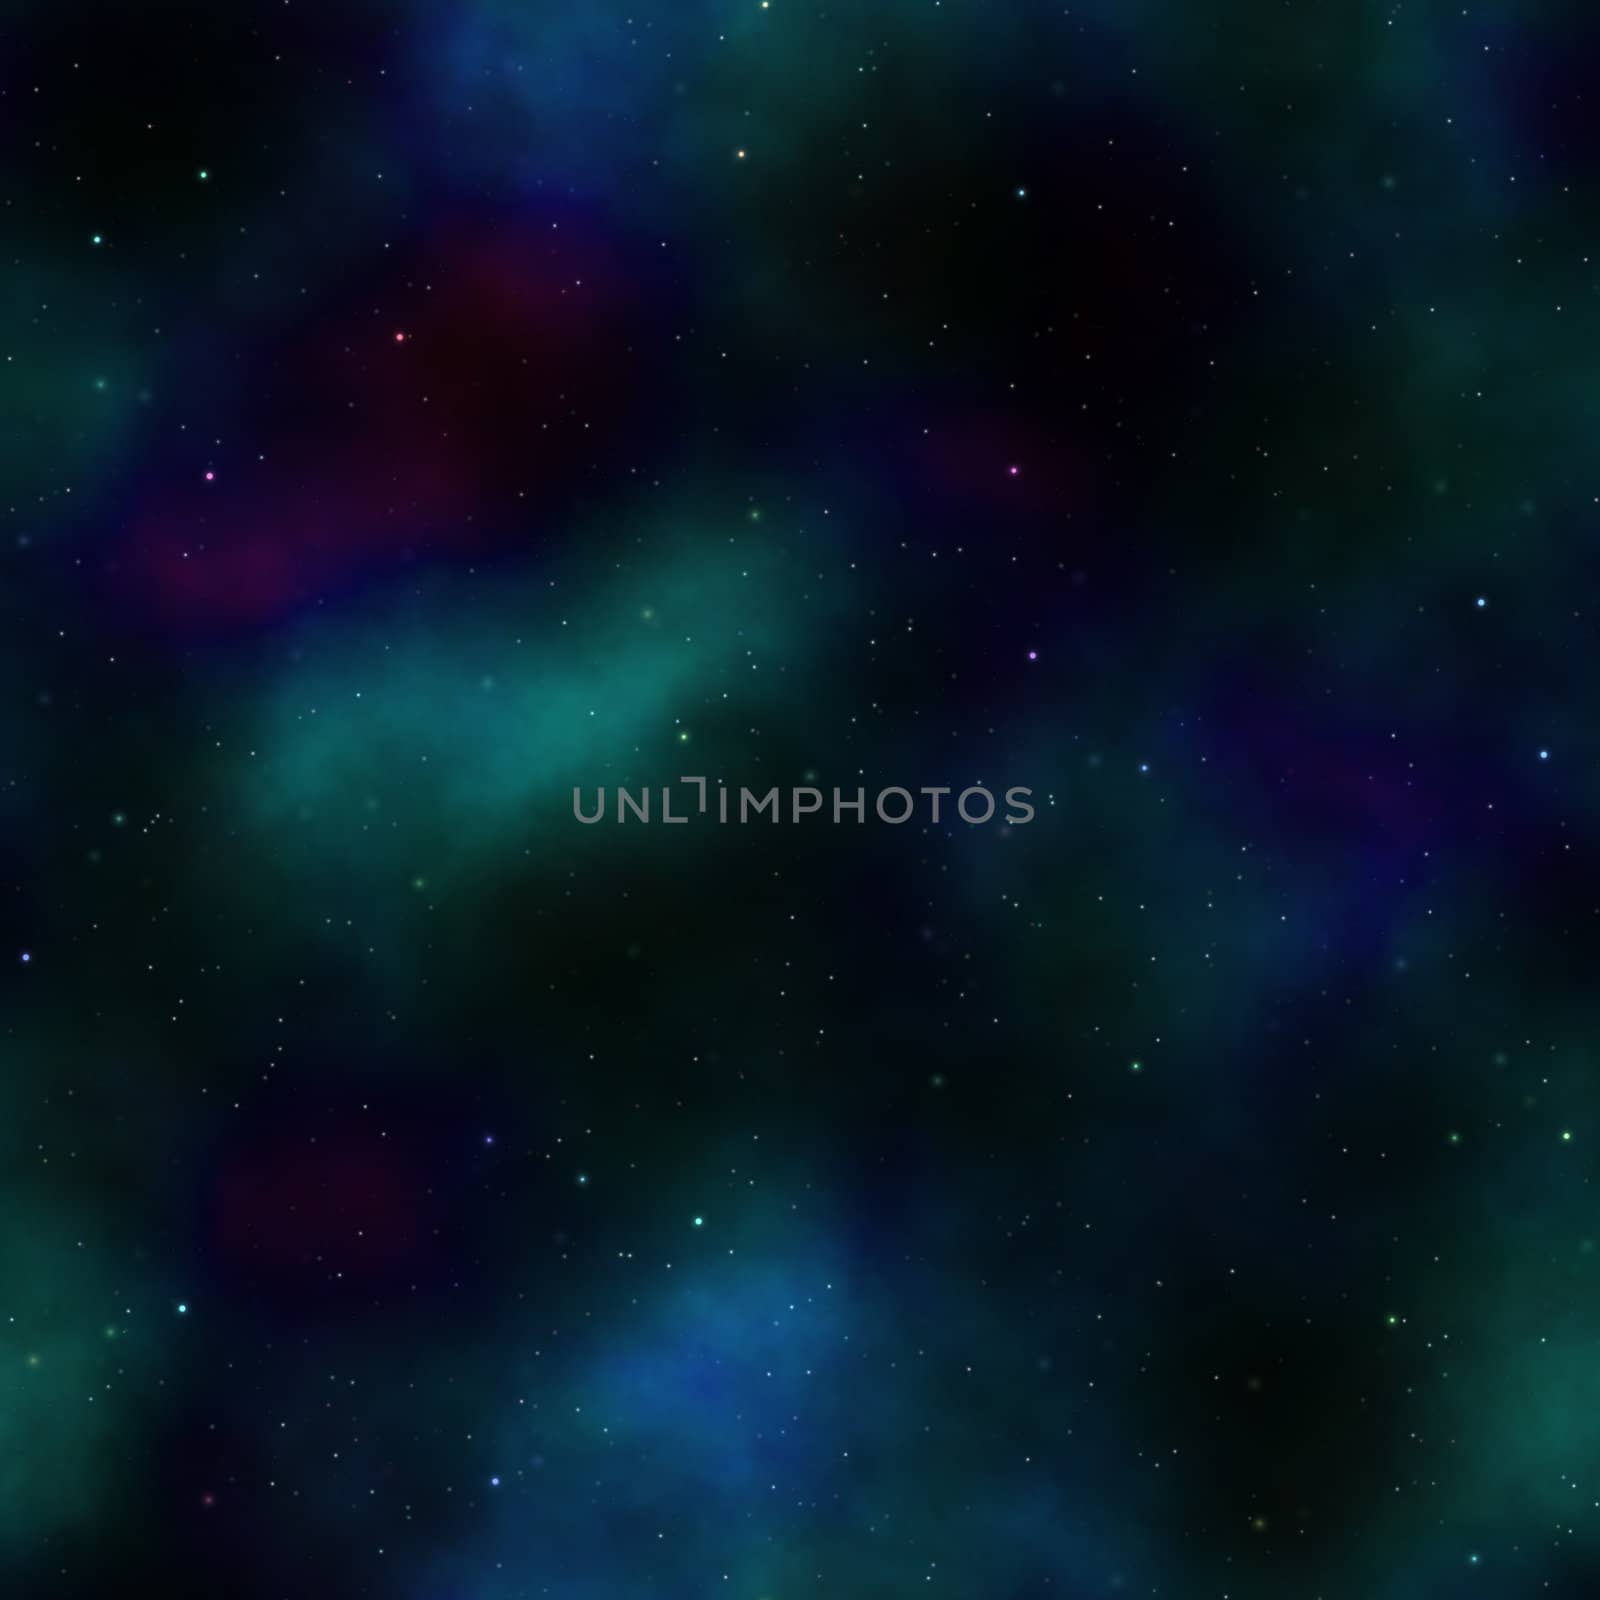 great background image stars and nebula in night sky